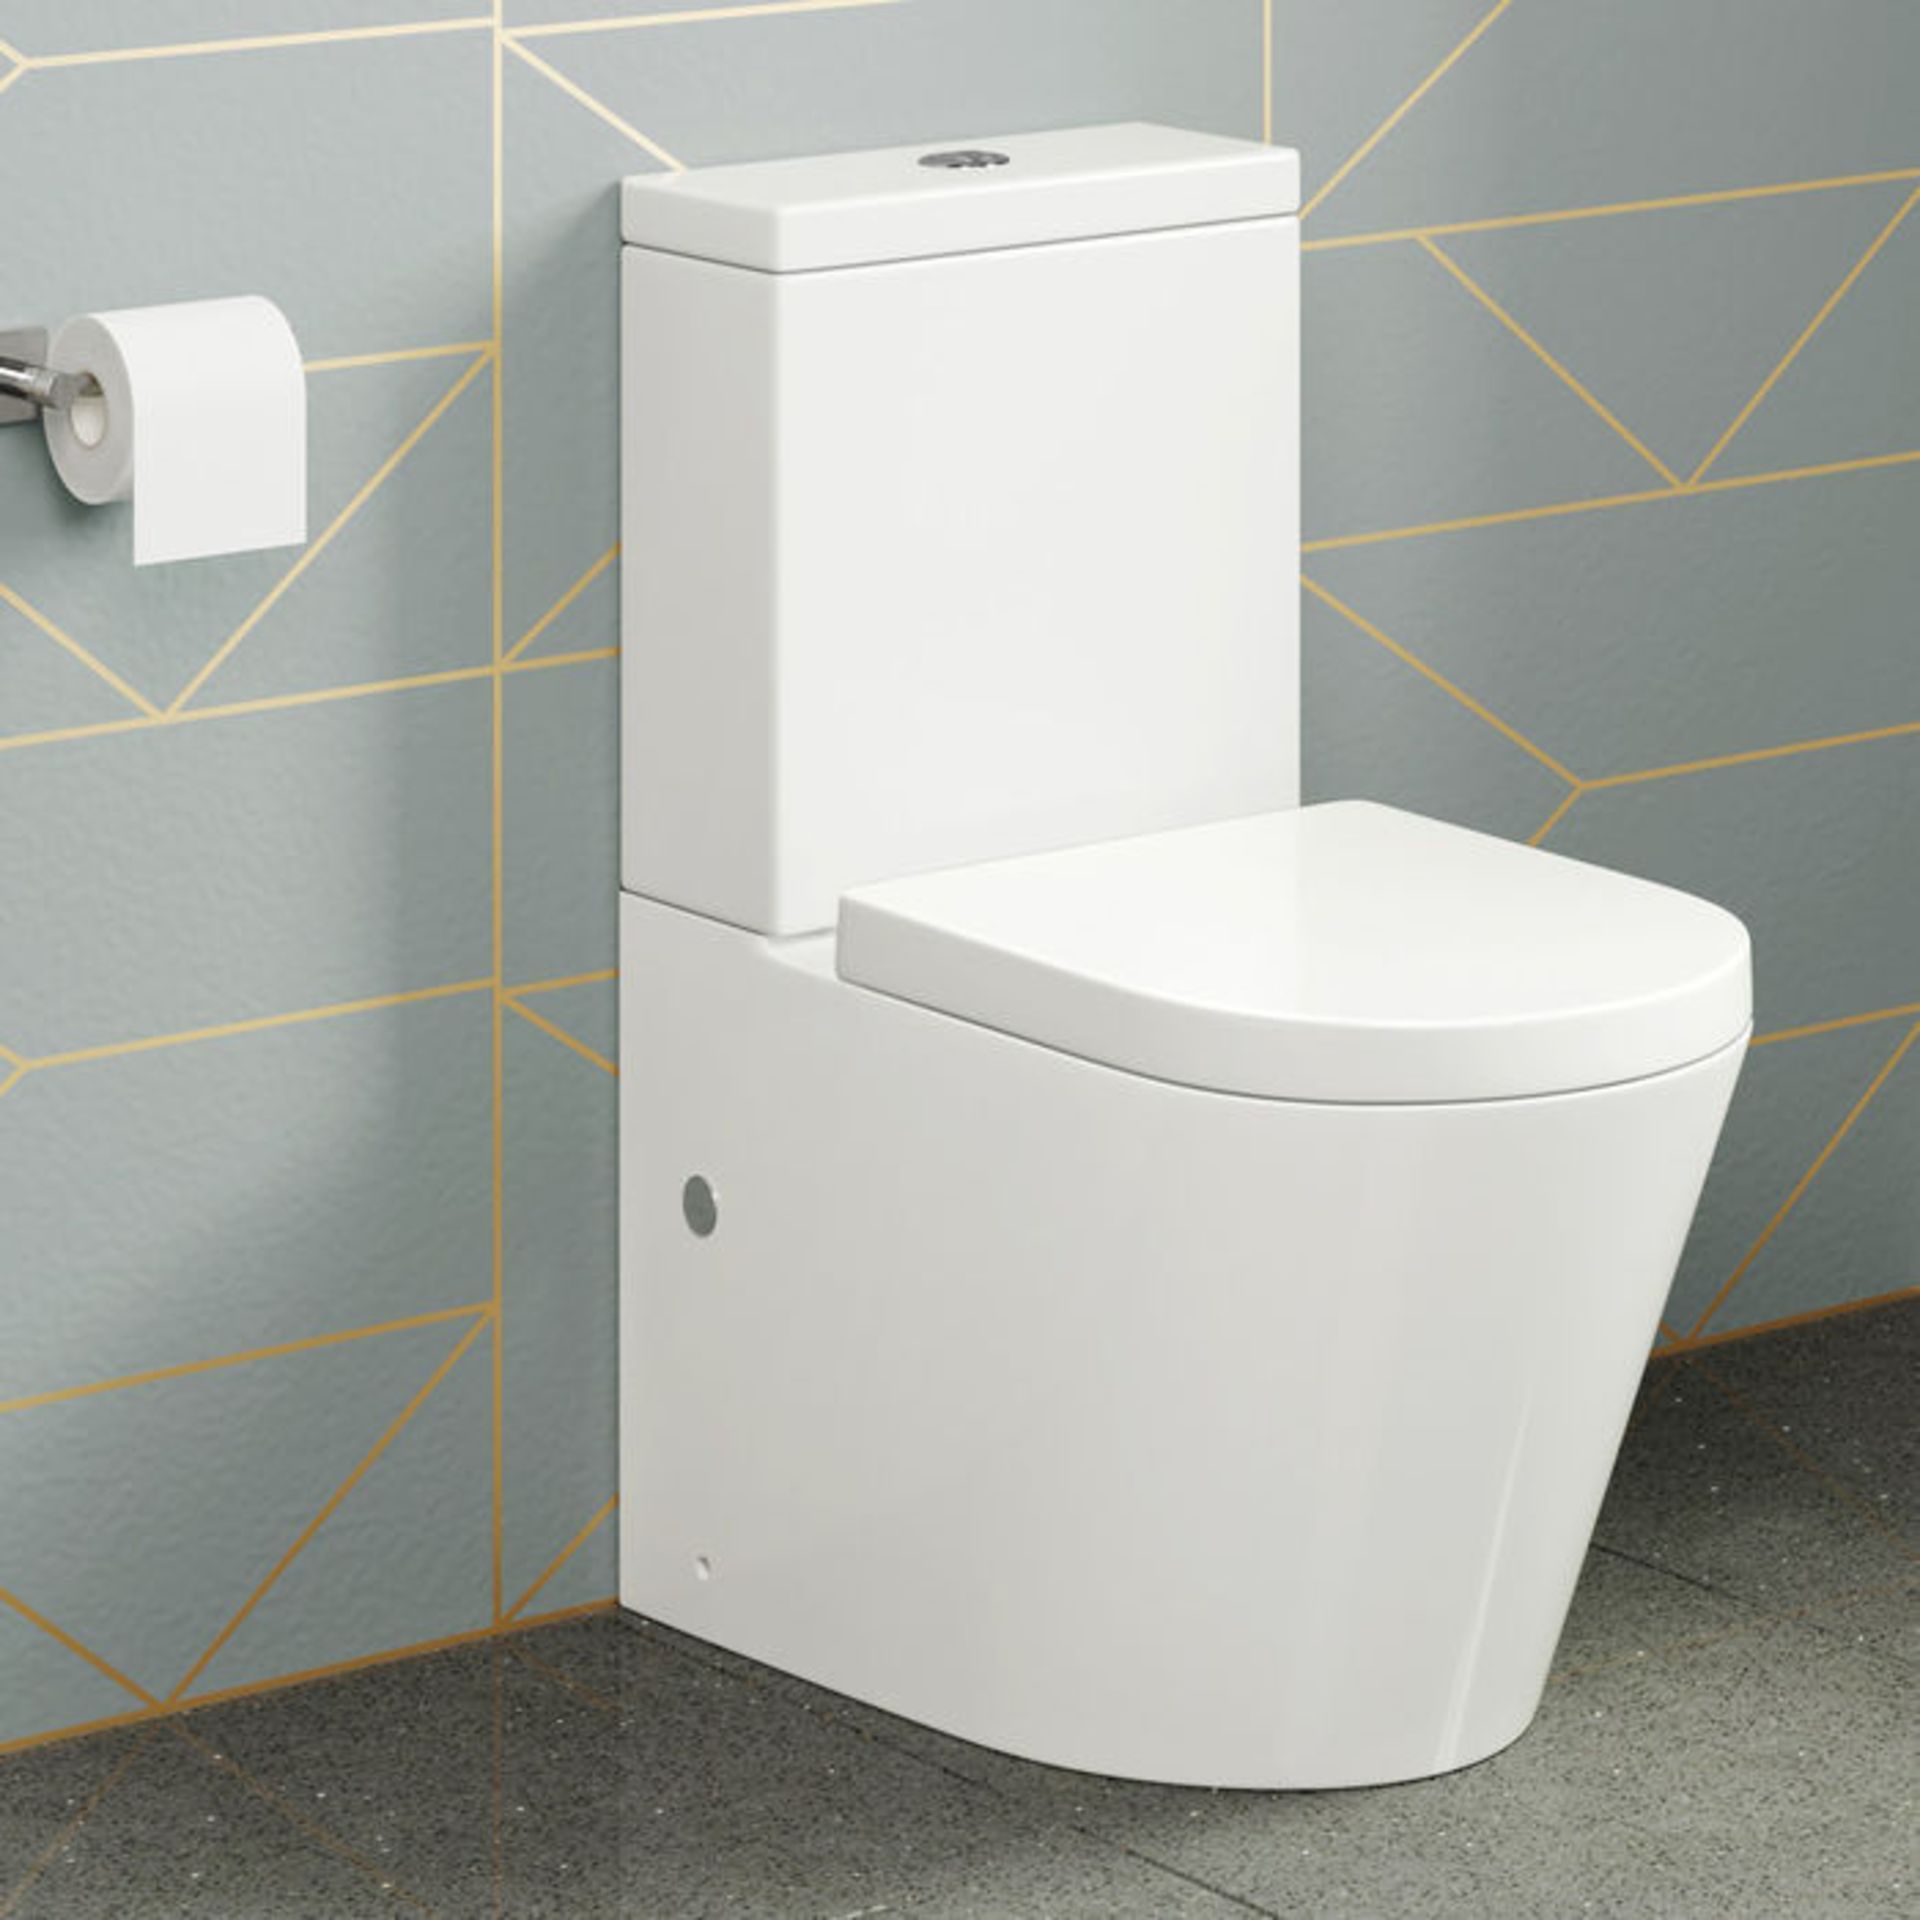 NEW Lyon II Close Coupled Toilet & Cistern inc Luxury Soft Close Seat. RRP £599.99